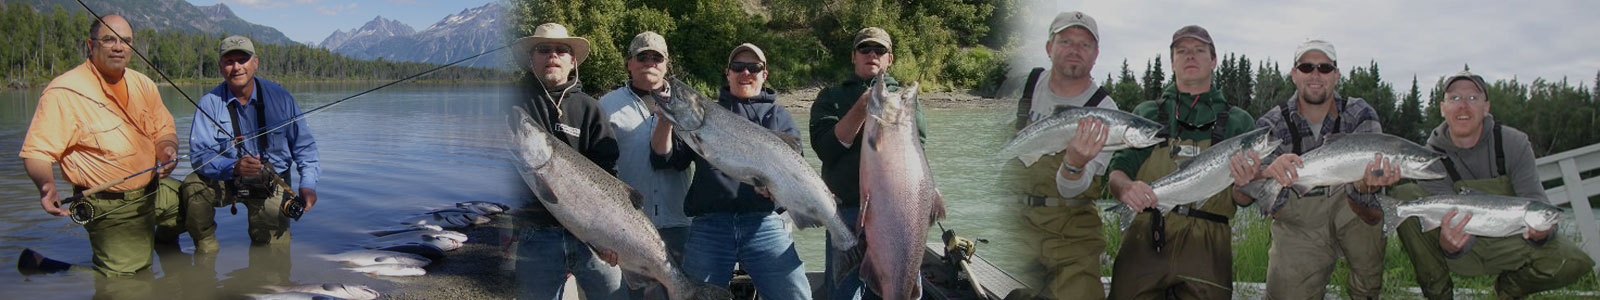 Salmon Fishing Trips to Alaska